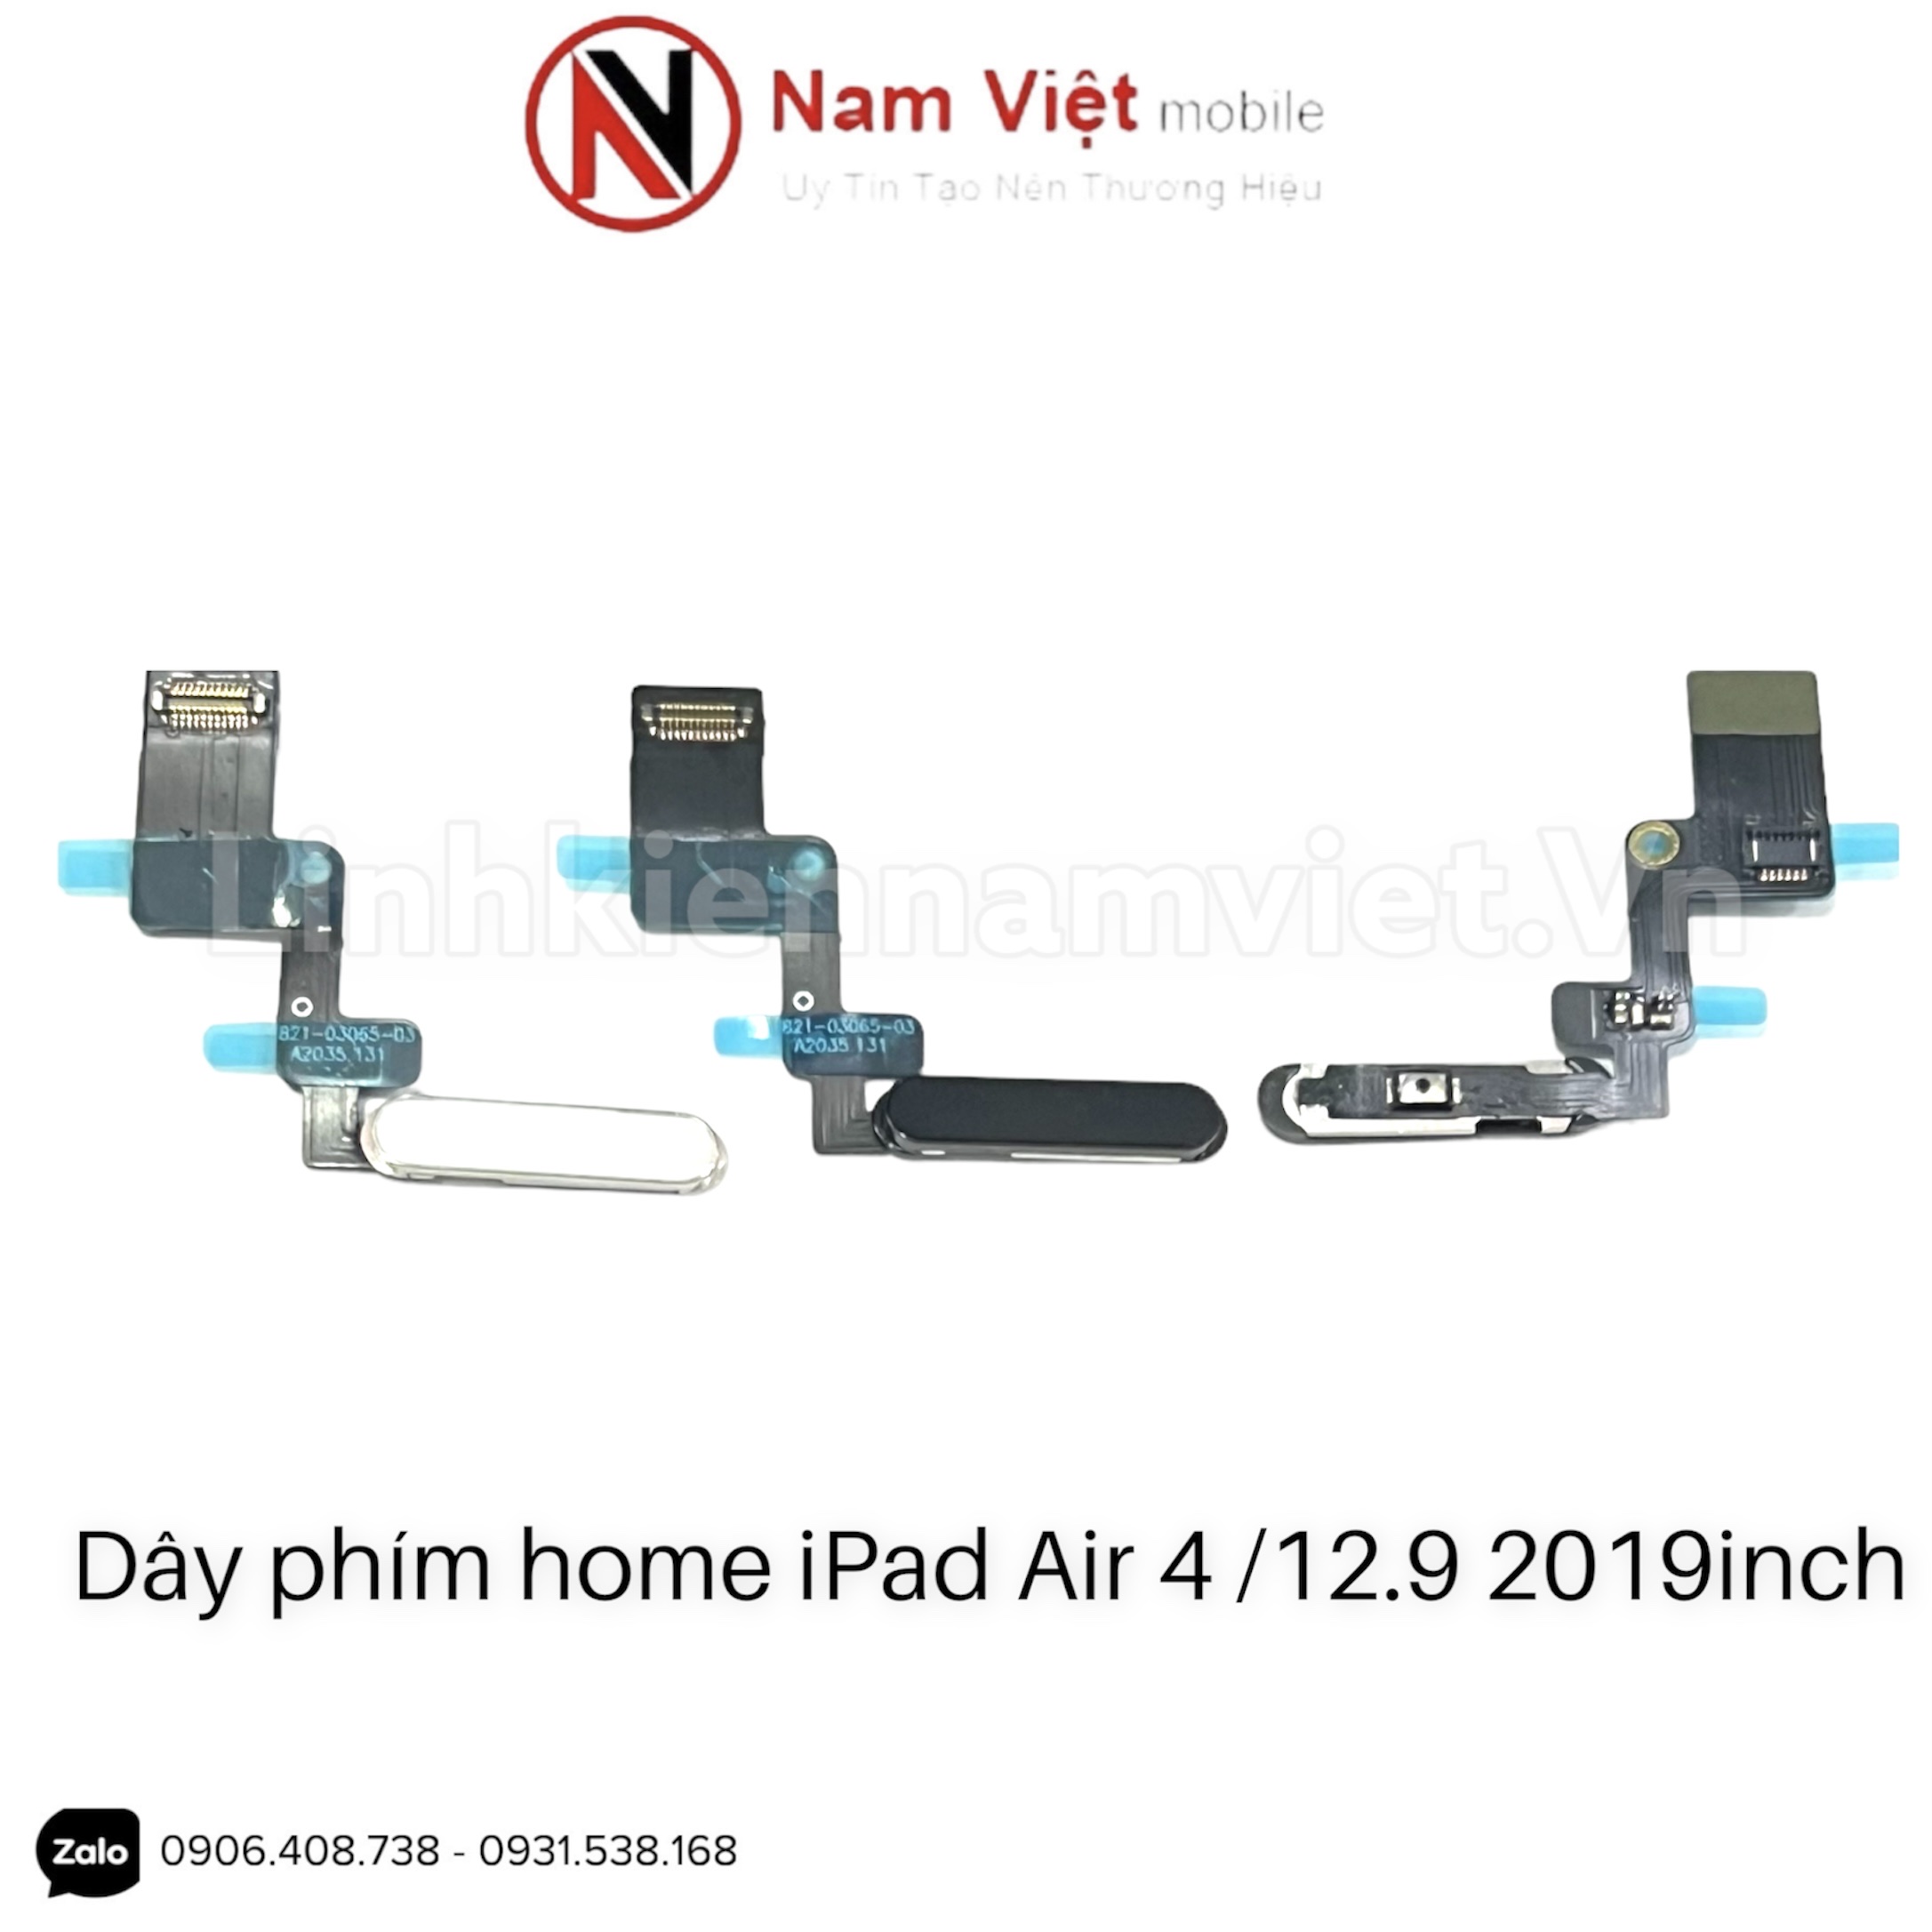 Dây phím Home iPad Air 4/ 12.9 2019 inch